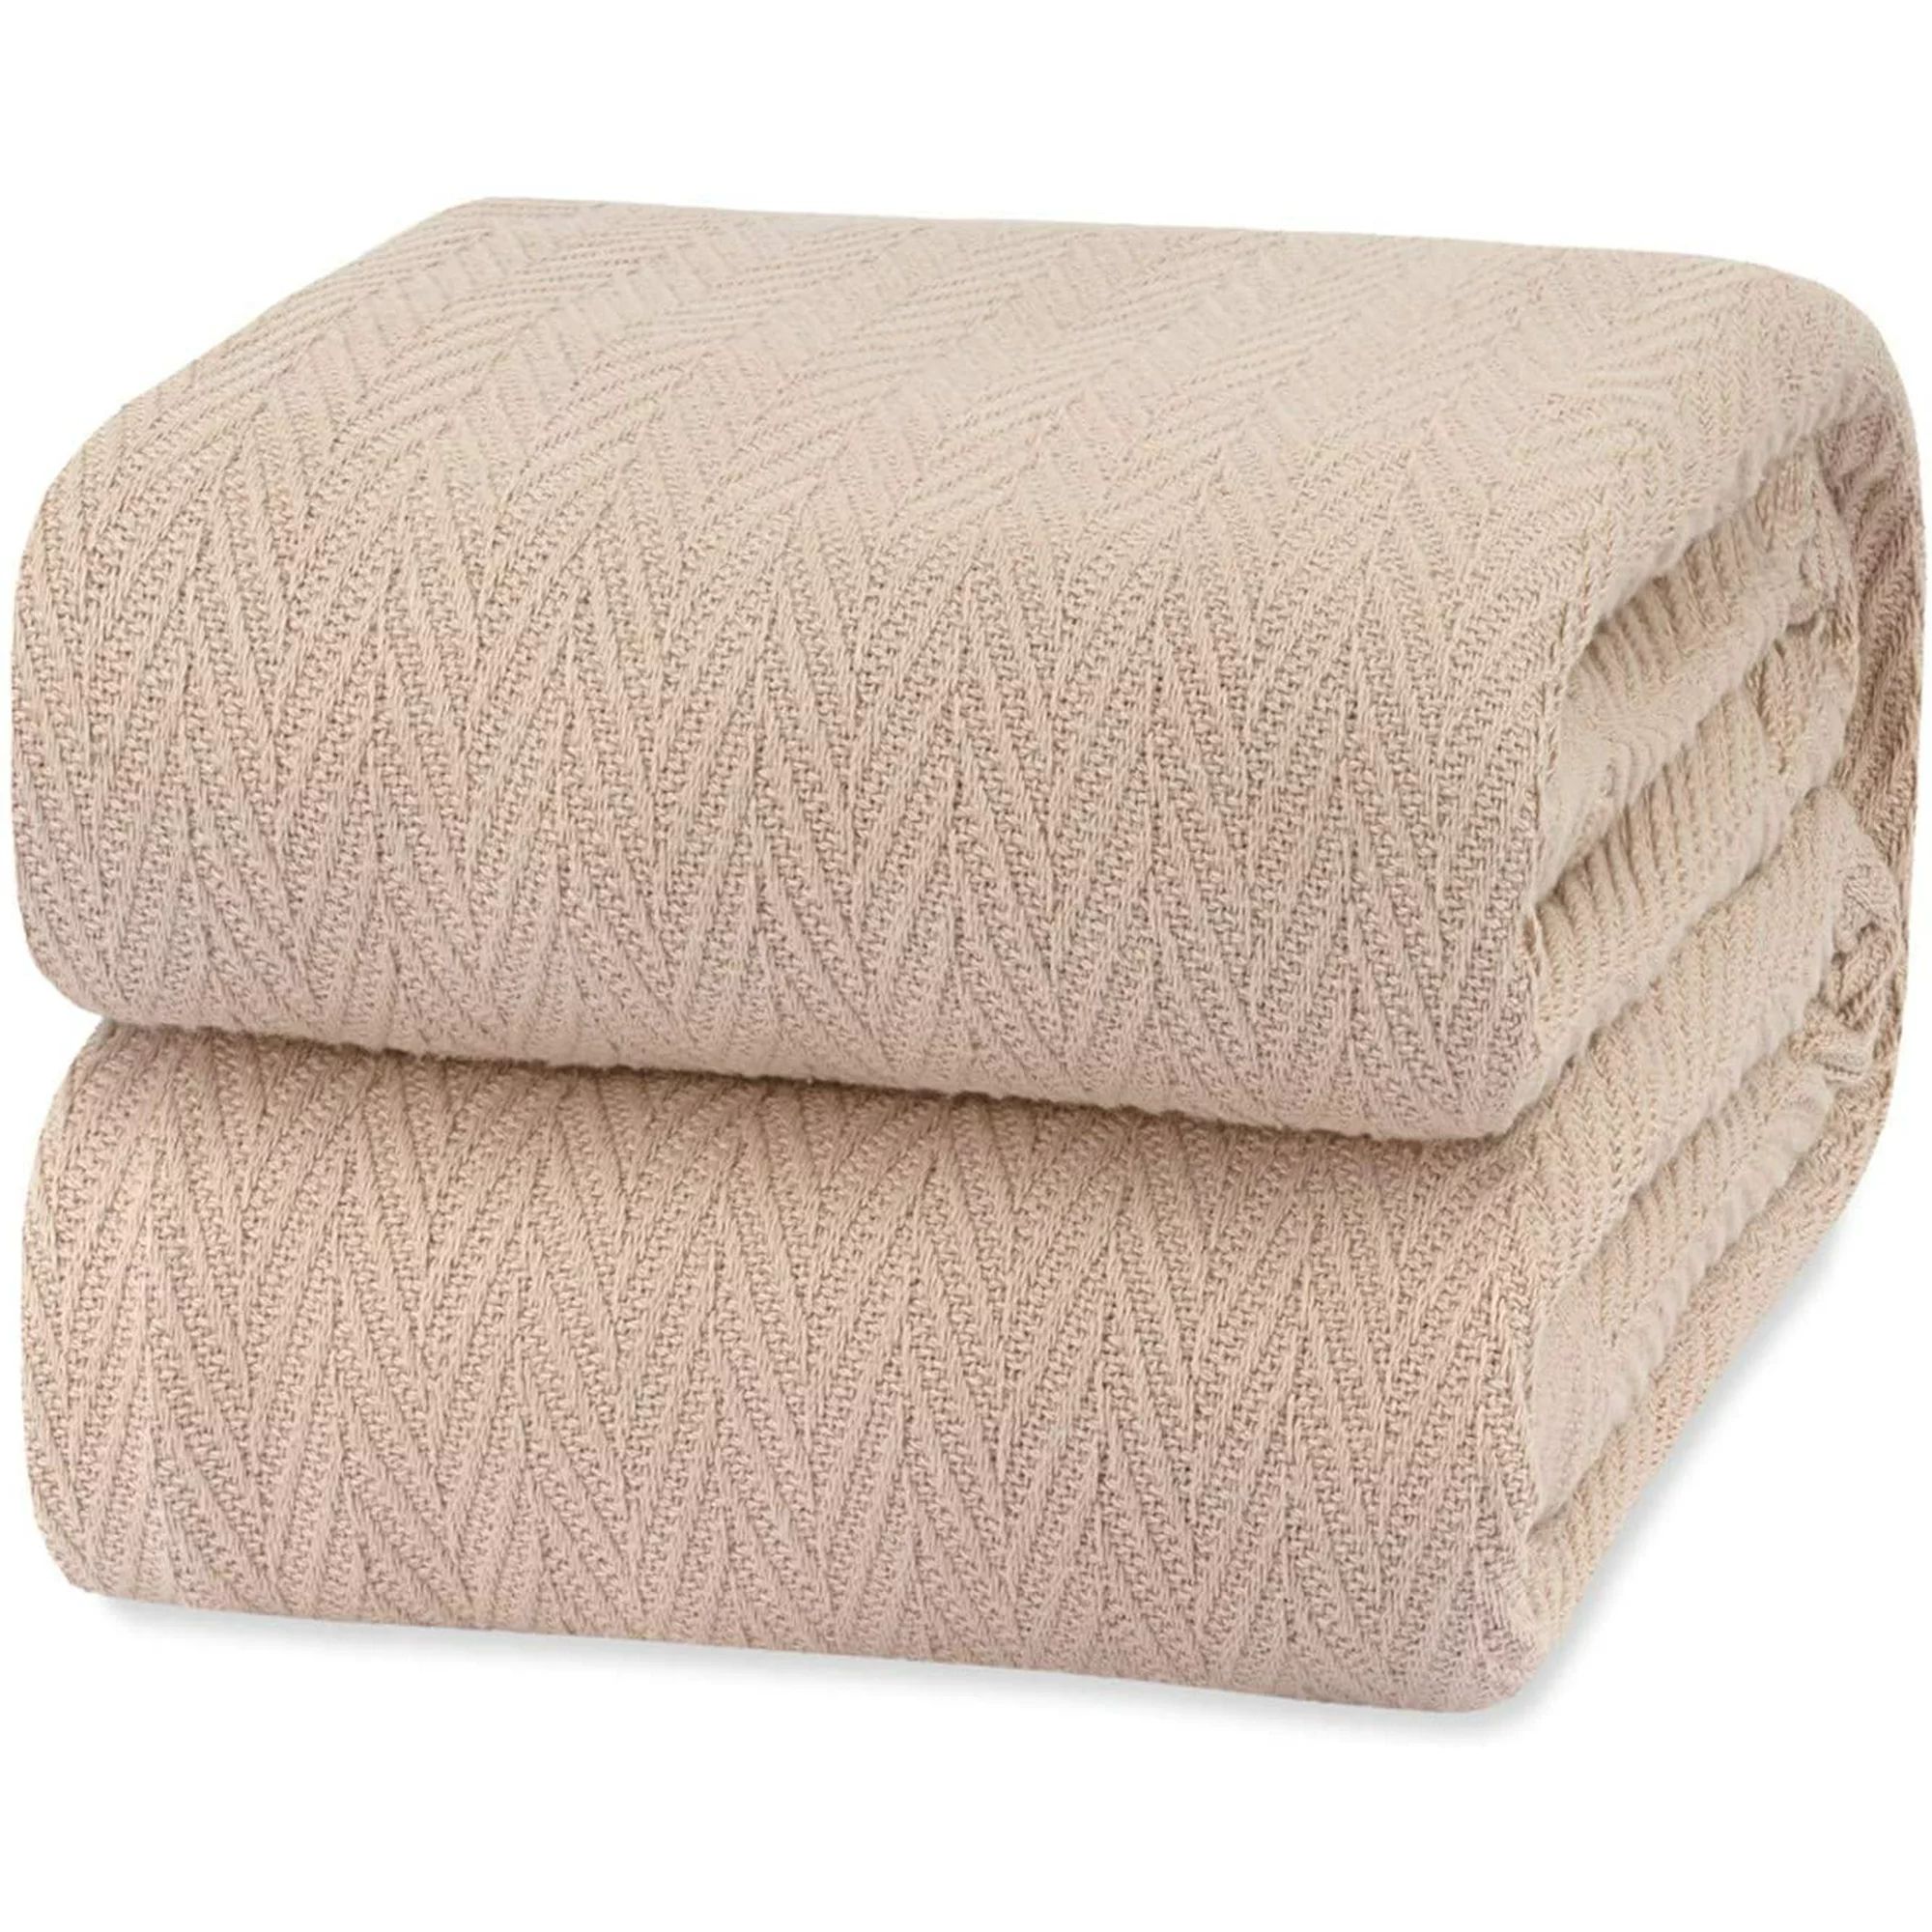 Luxury Thermal Cotton Blankets, King Size- Beige | Walmart (US)